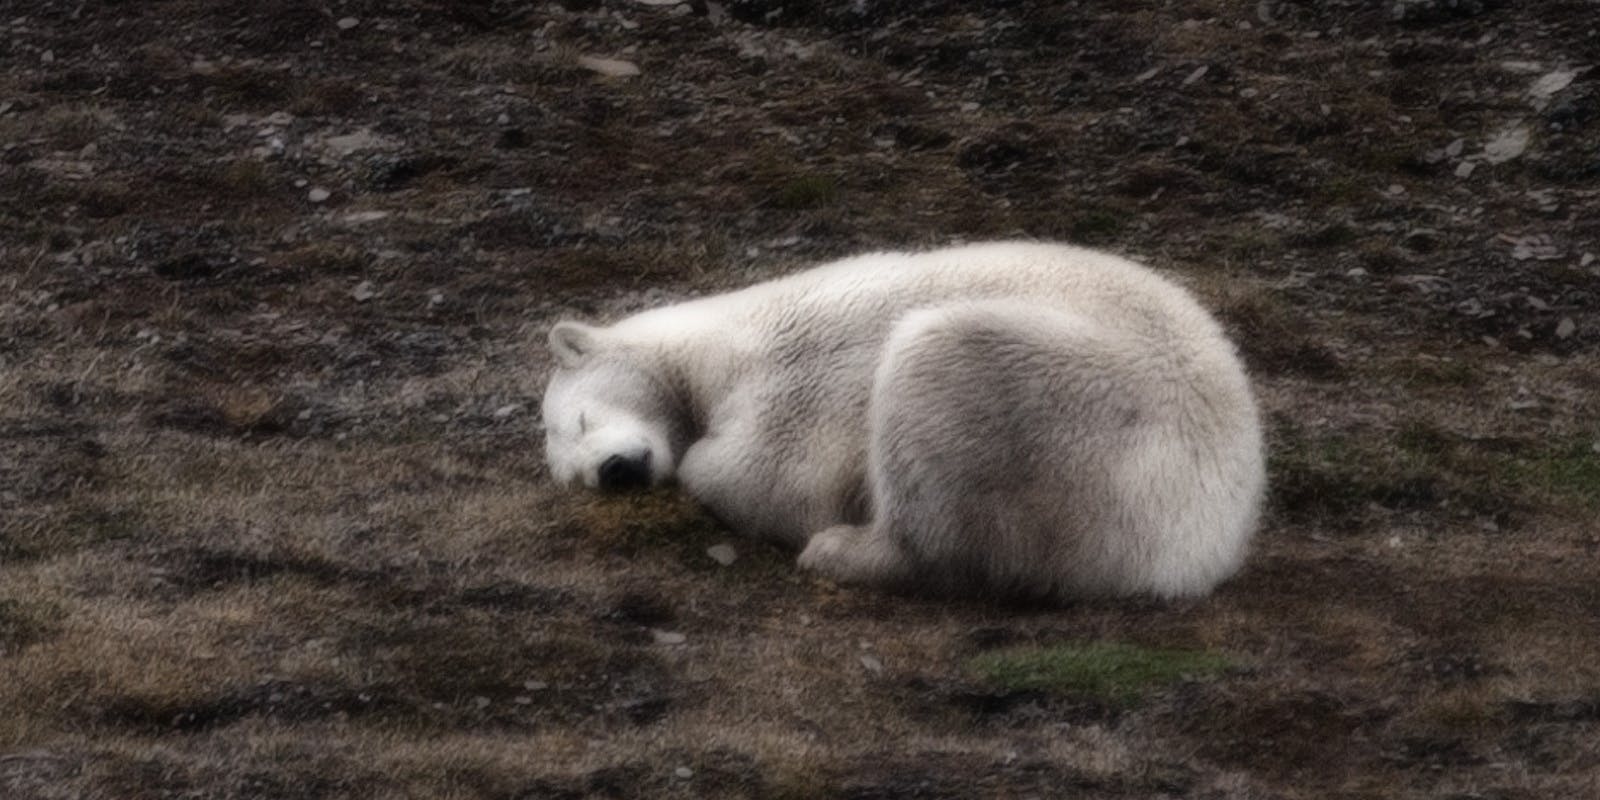 Polar bear resting